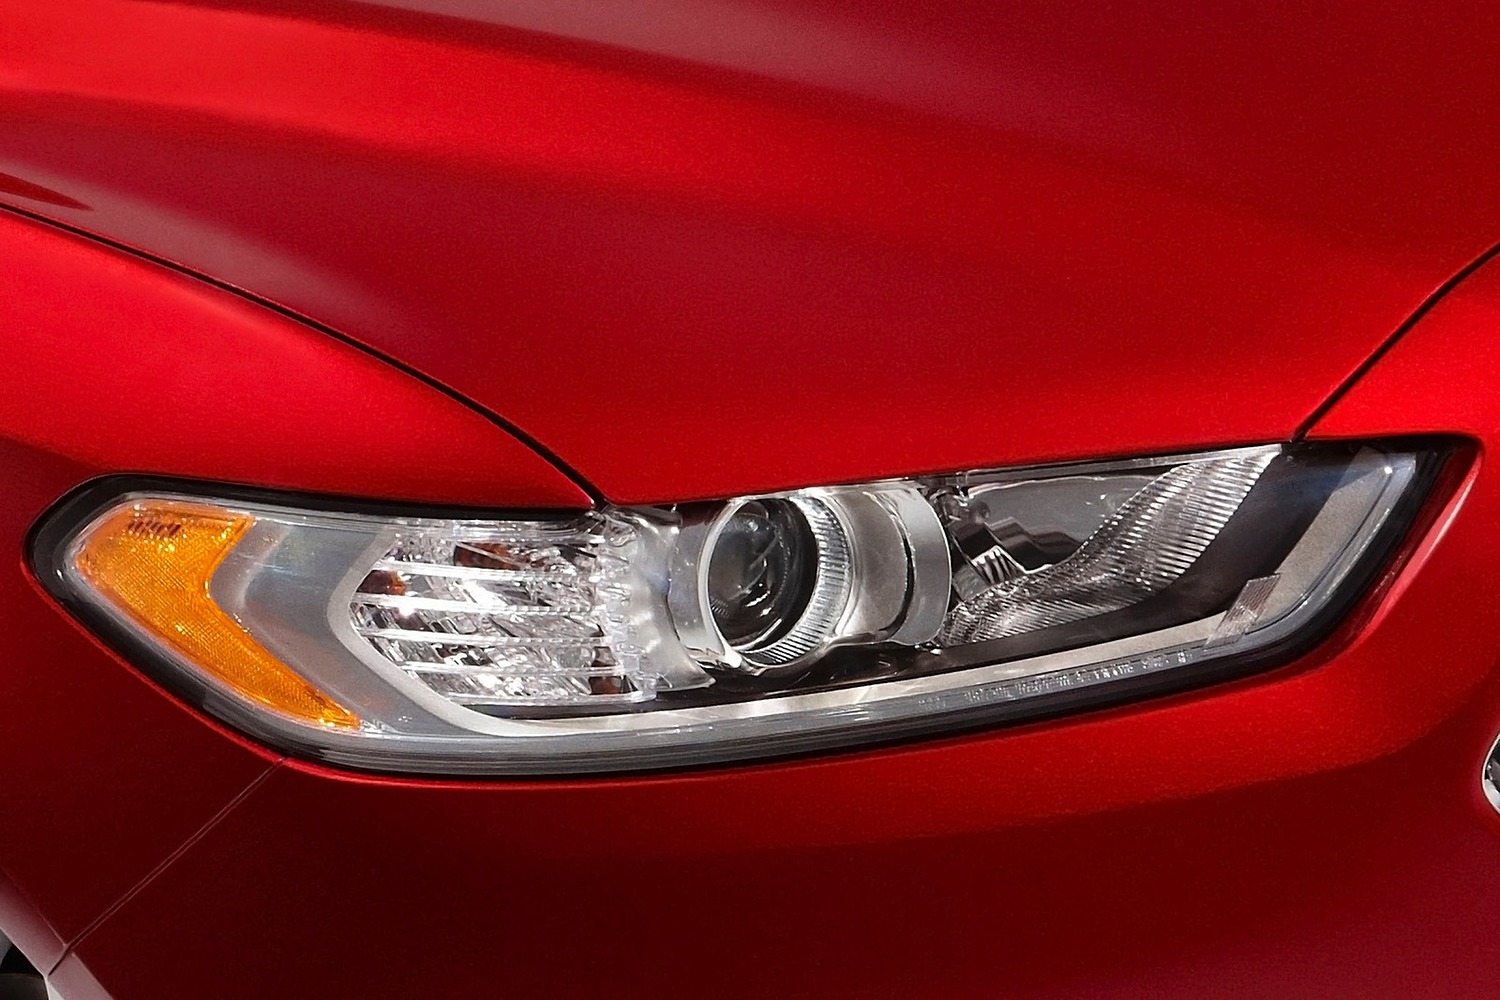 Ford Fusion Titanium Sedan Headlamp Detail (2013 model year shown)